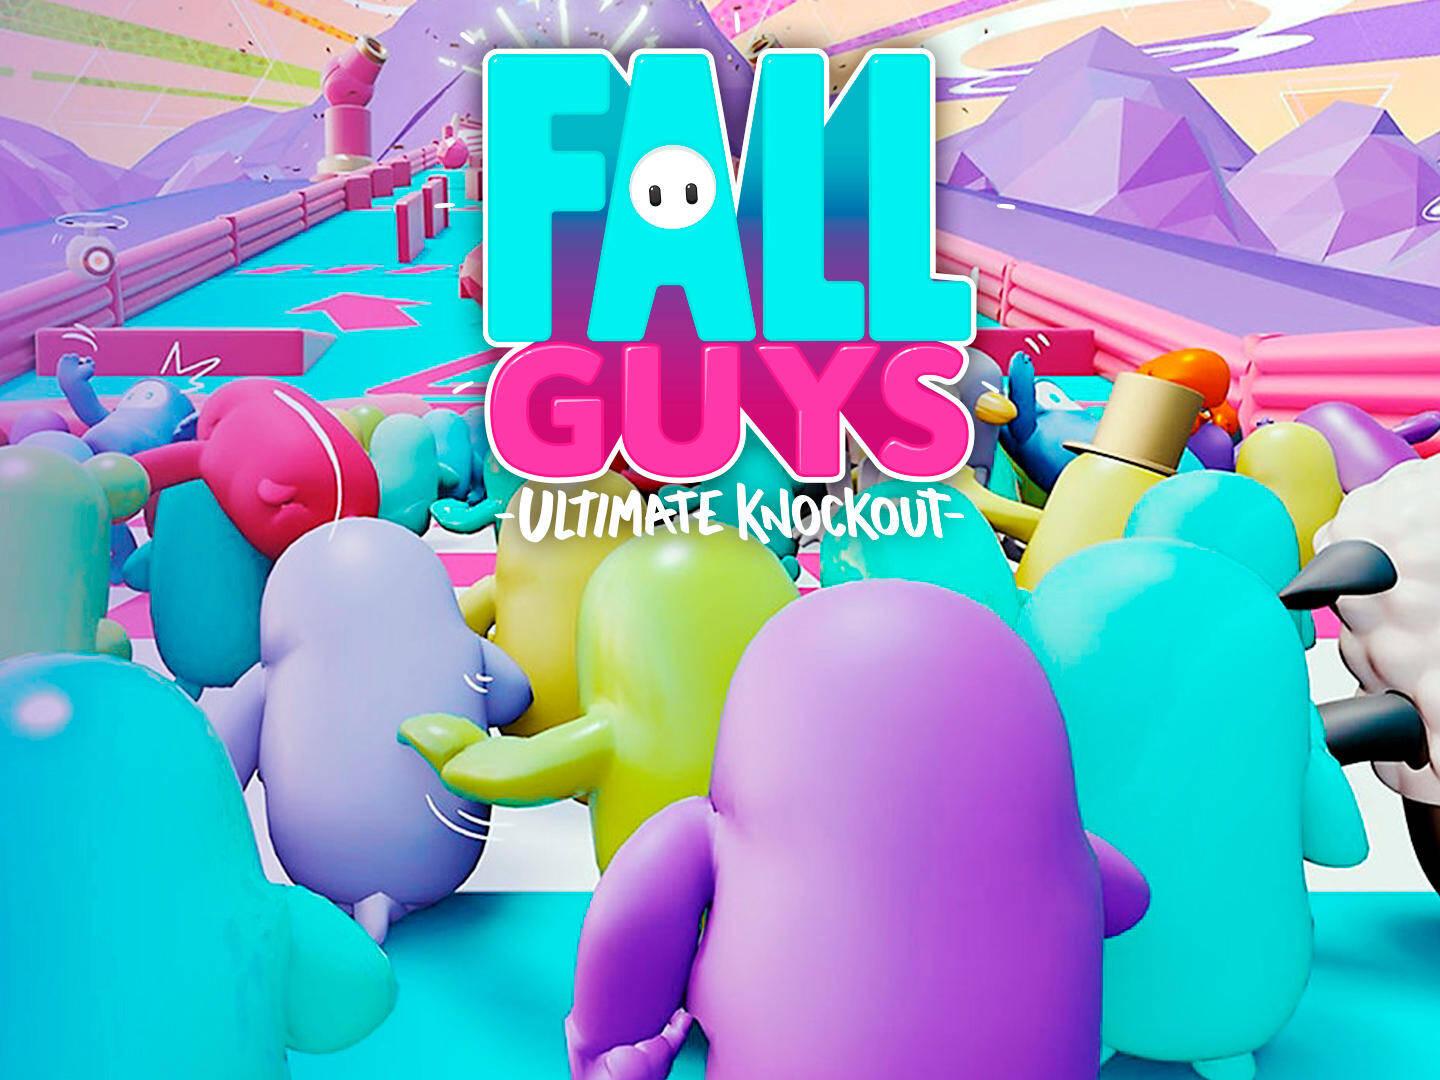 Fall Guys: Ultimate Knockout, o mais novo fenômeno multijogador online